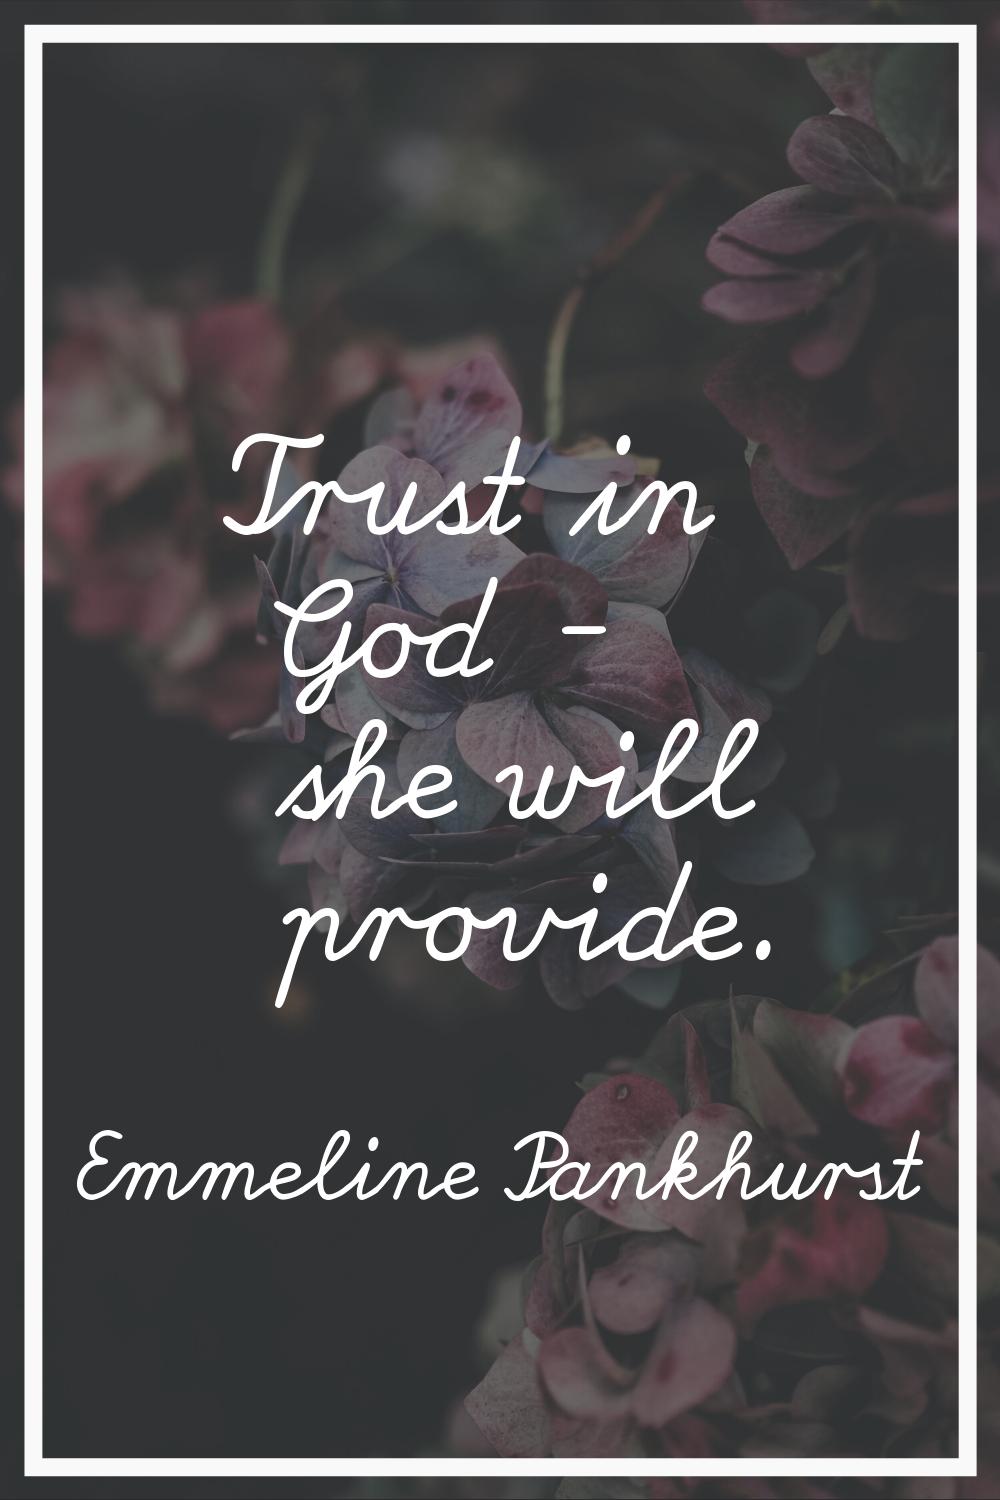 Trust in God - she will provide.